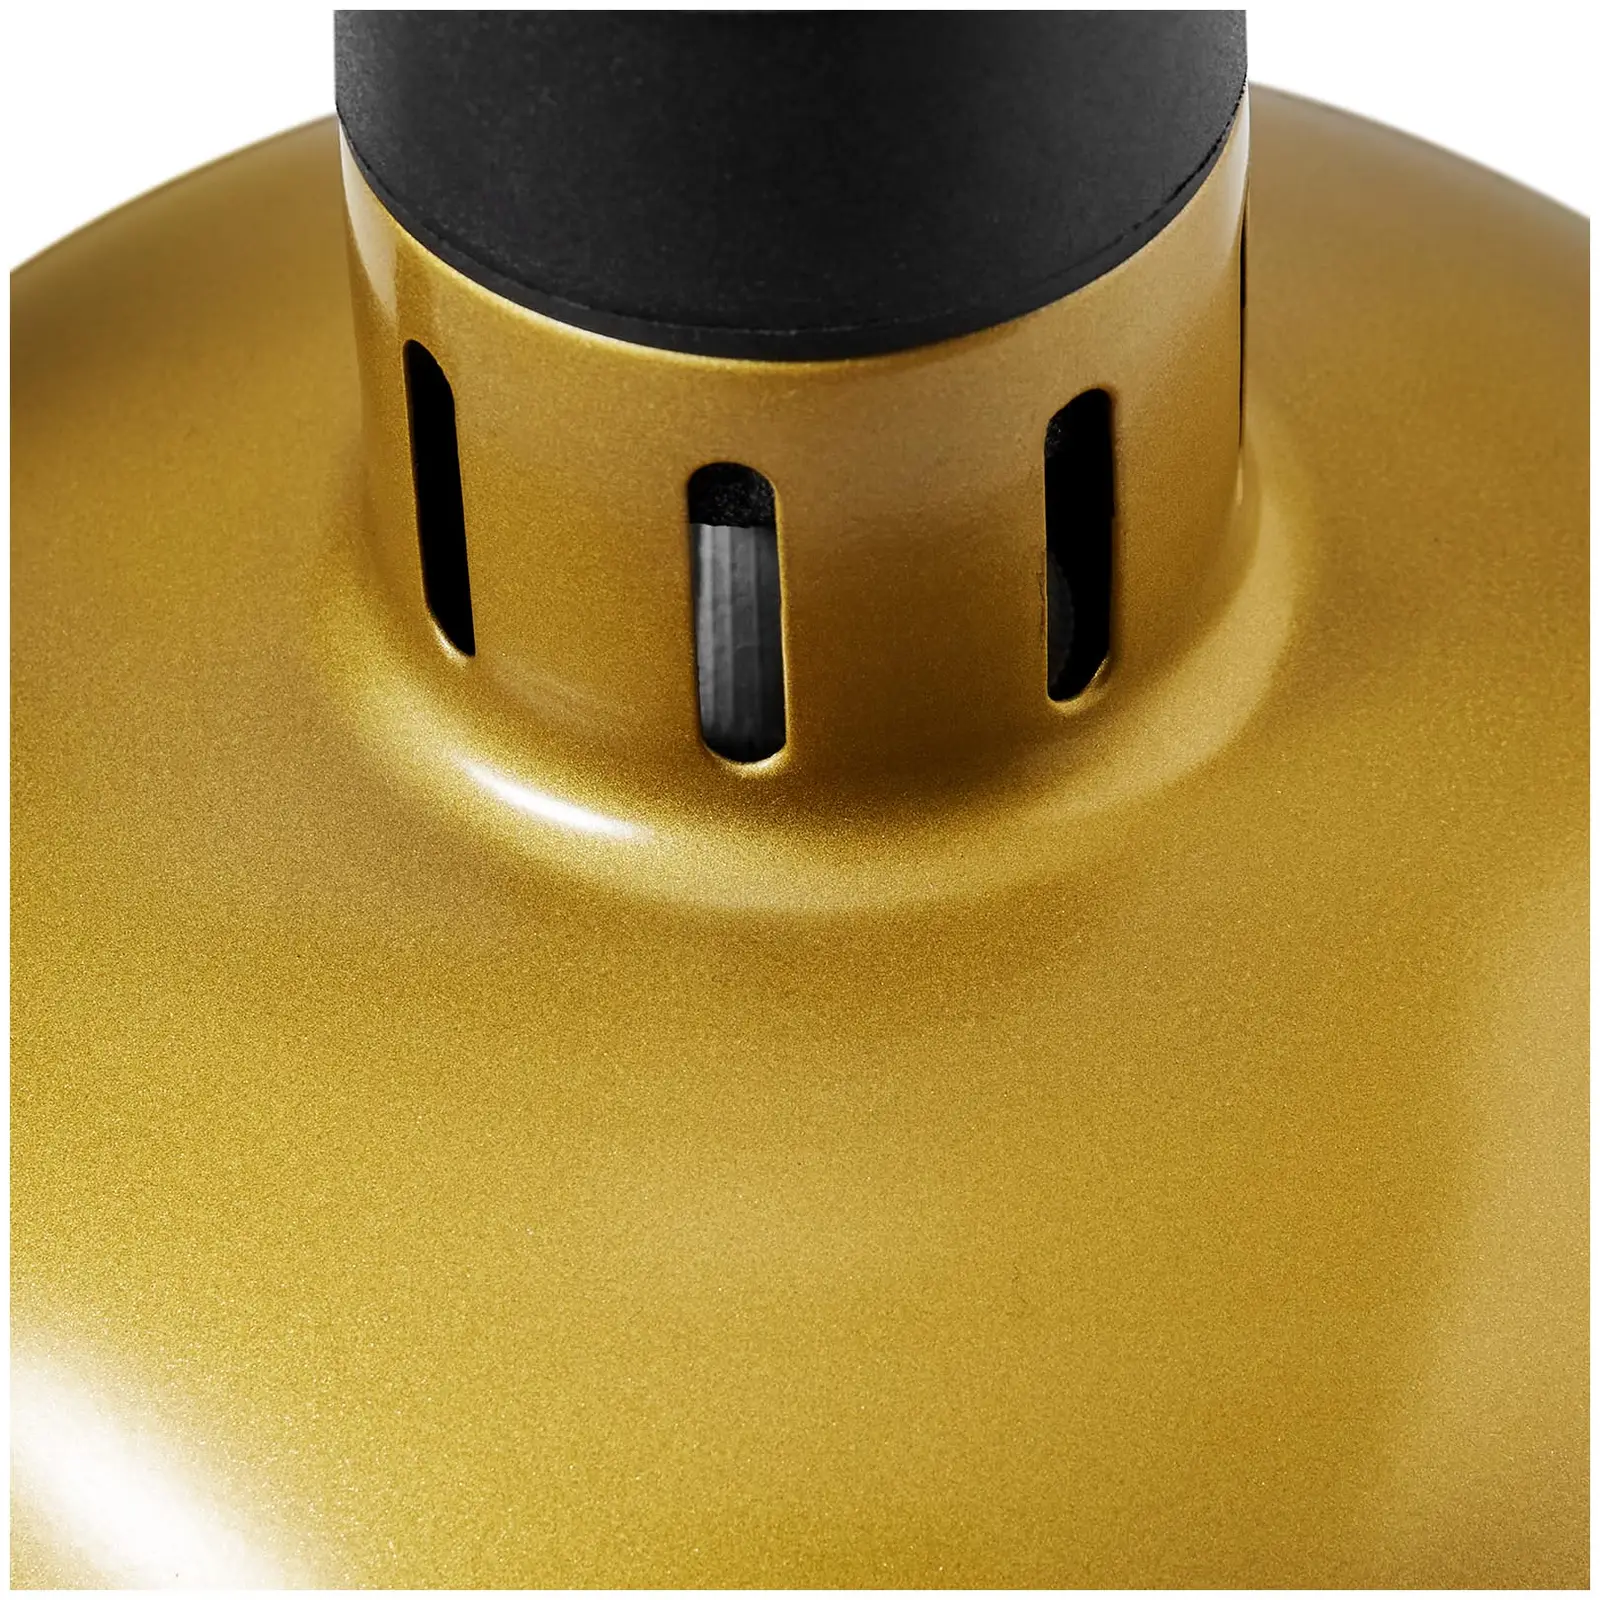 Lampada riscaldante - oro pallido - 29 x 29 x 29.5 cm  - acciaio - regolabile in altezza